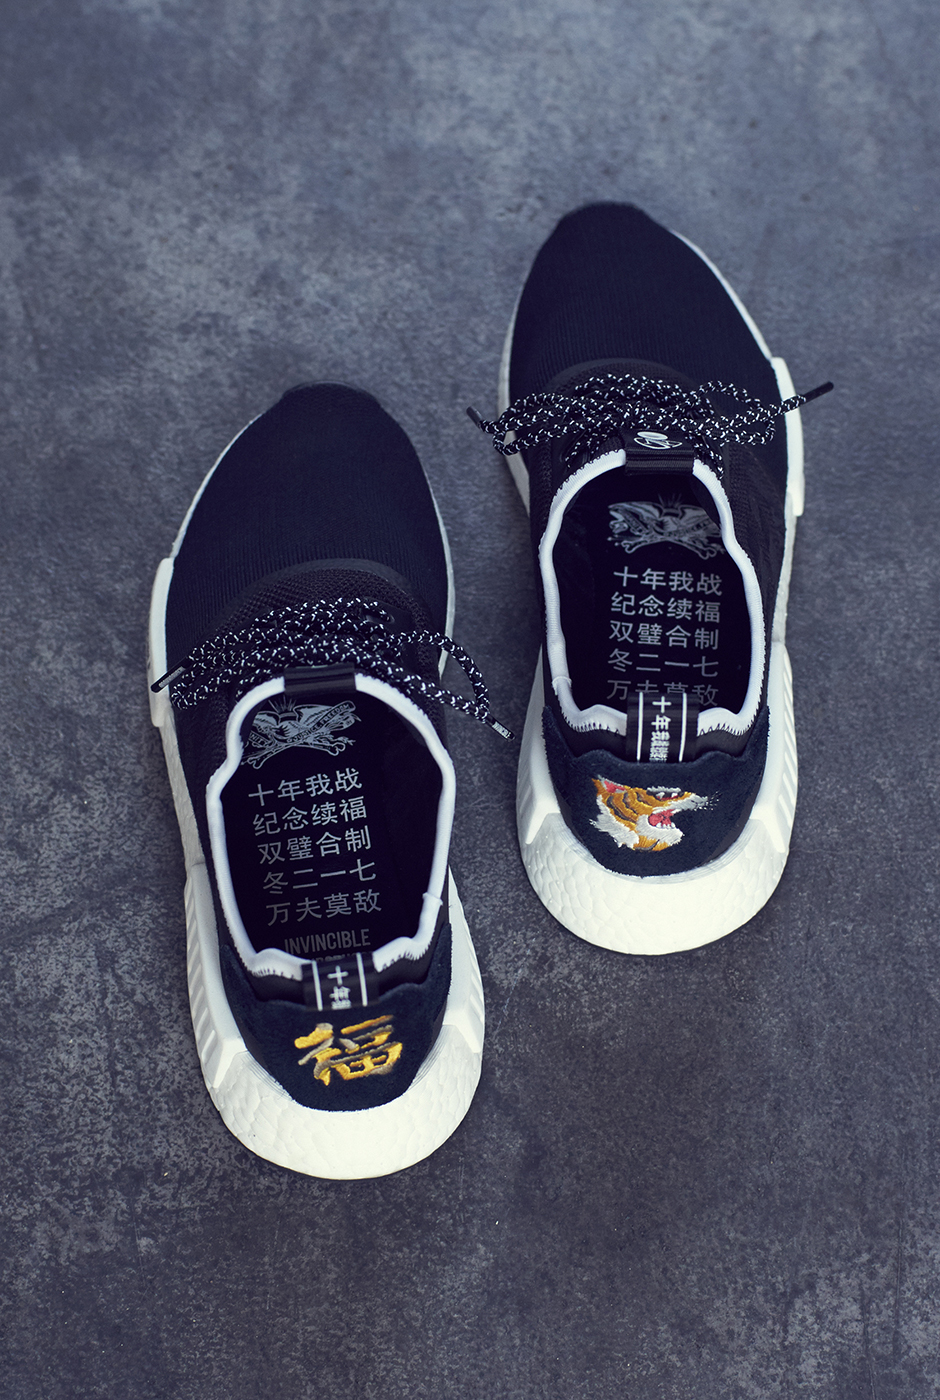 Invincible NEIGHBORHOOD adidas NMD R1 CQ1775 Release Date | SneakerNews.com